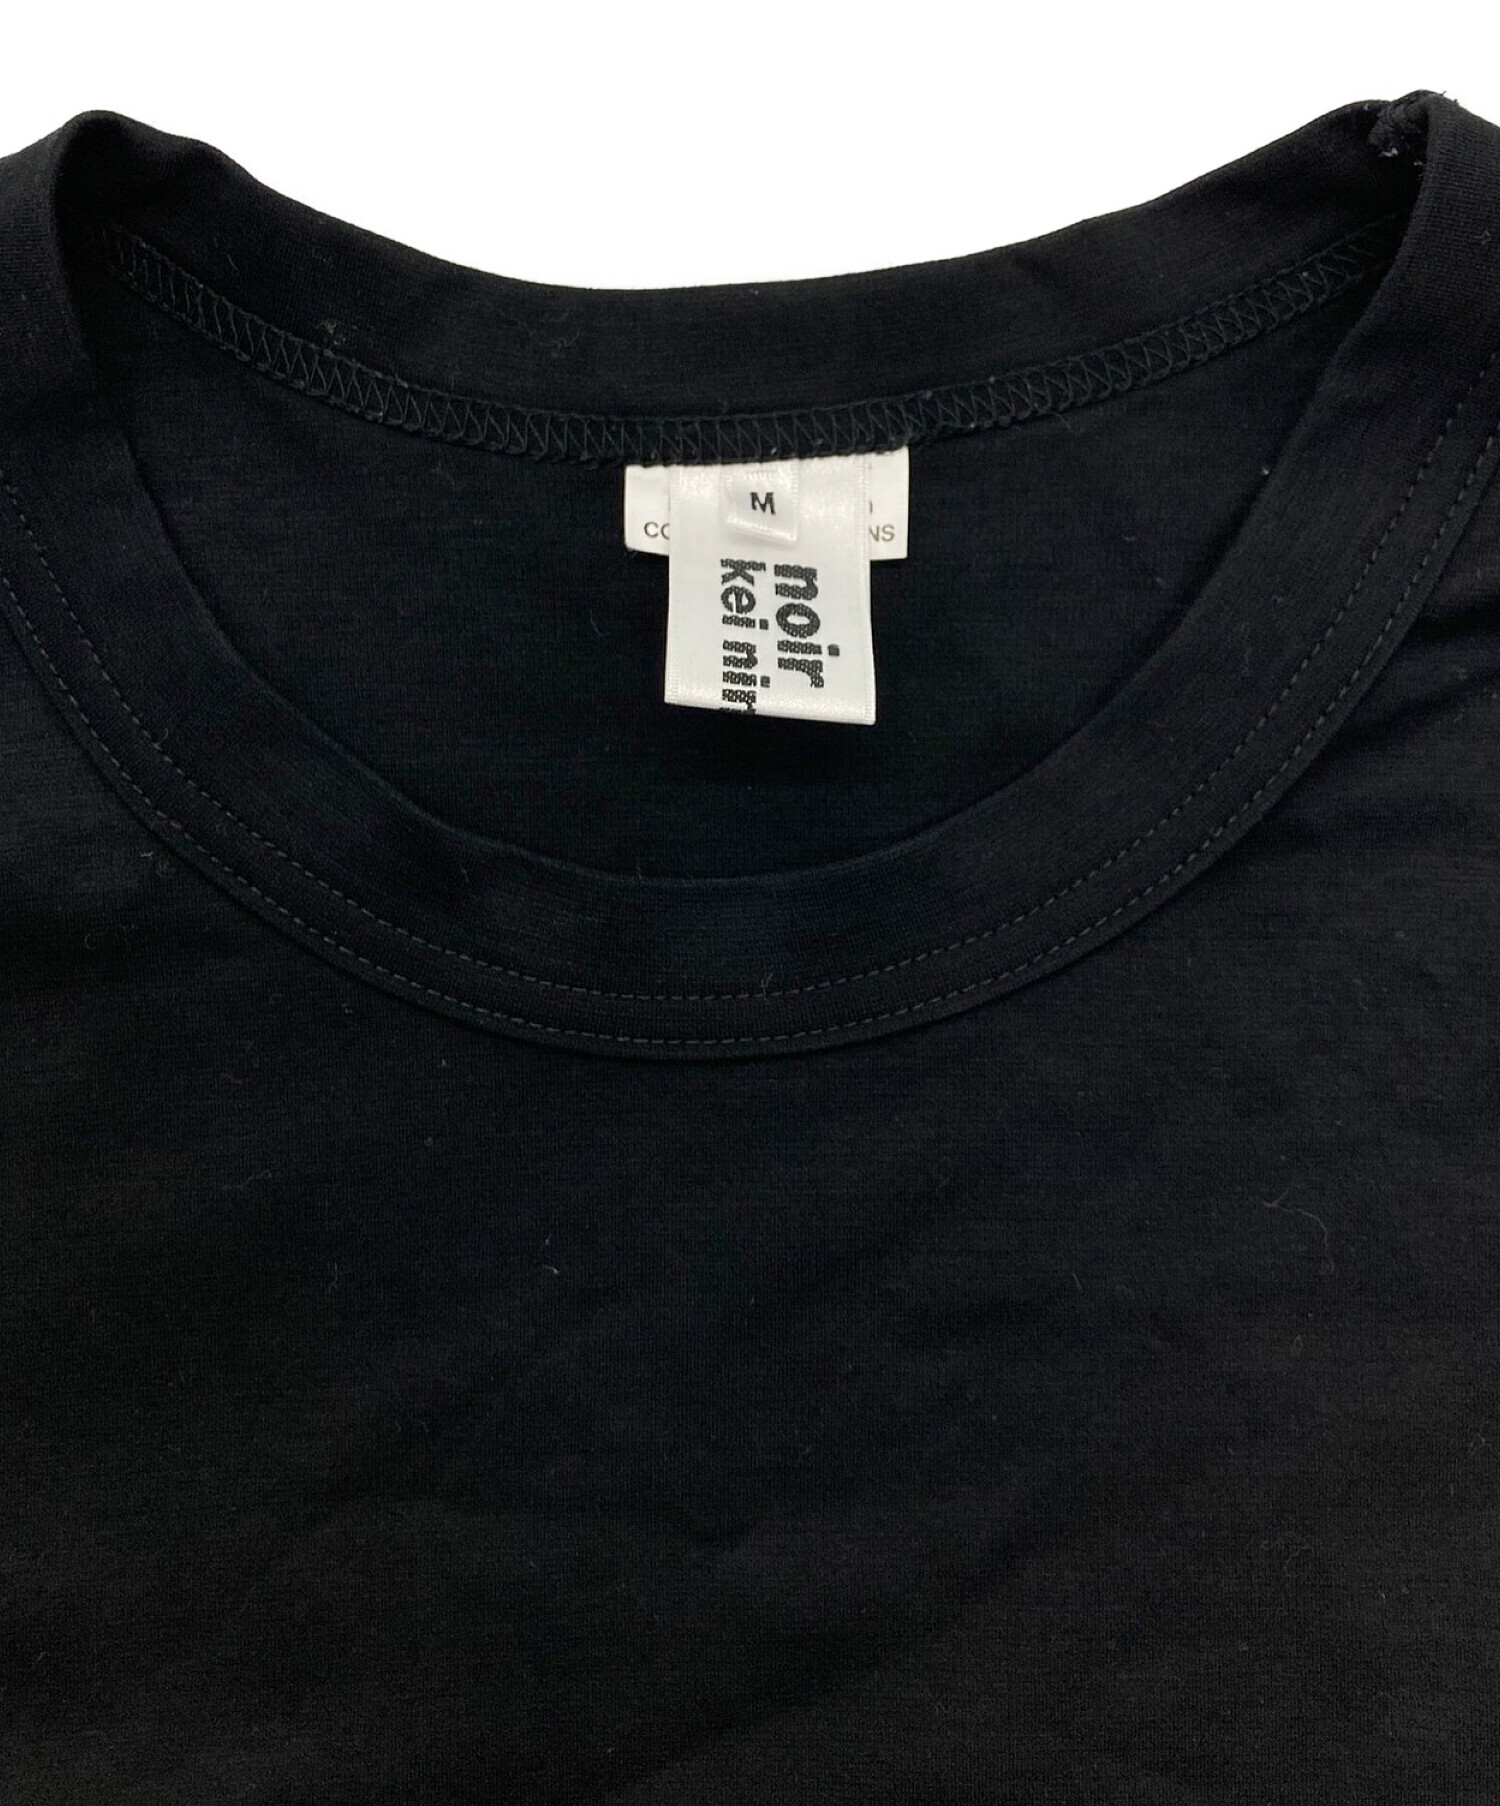 noir kei ninomiya (ノワール ケイ ニノミヤ) COMME des GARCONS (コムデギャルソン) Tシャツ ブラック  サイズ:M